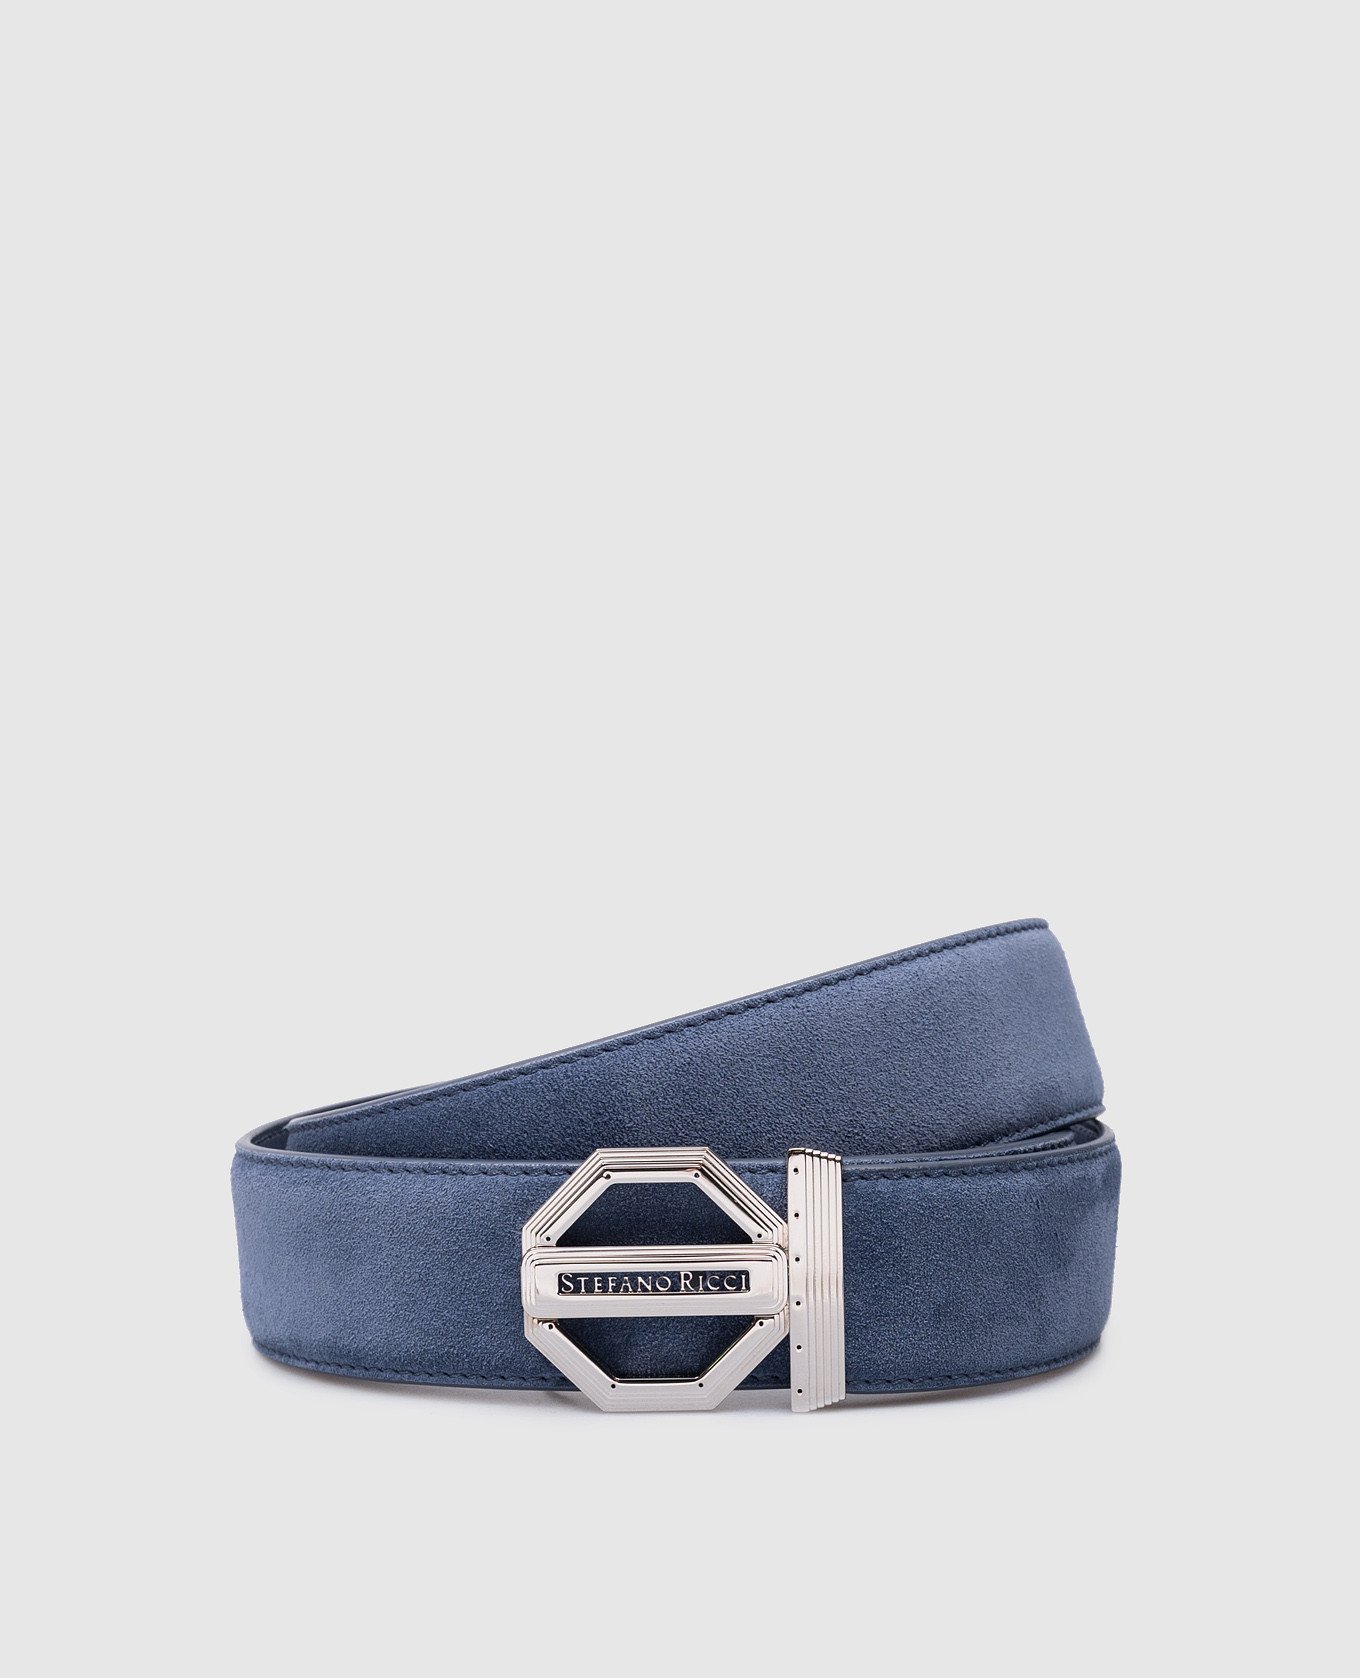 Blue suede belt with metal logo